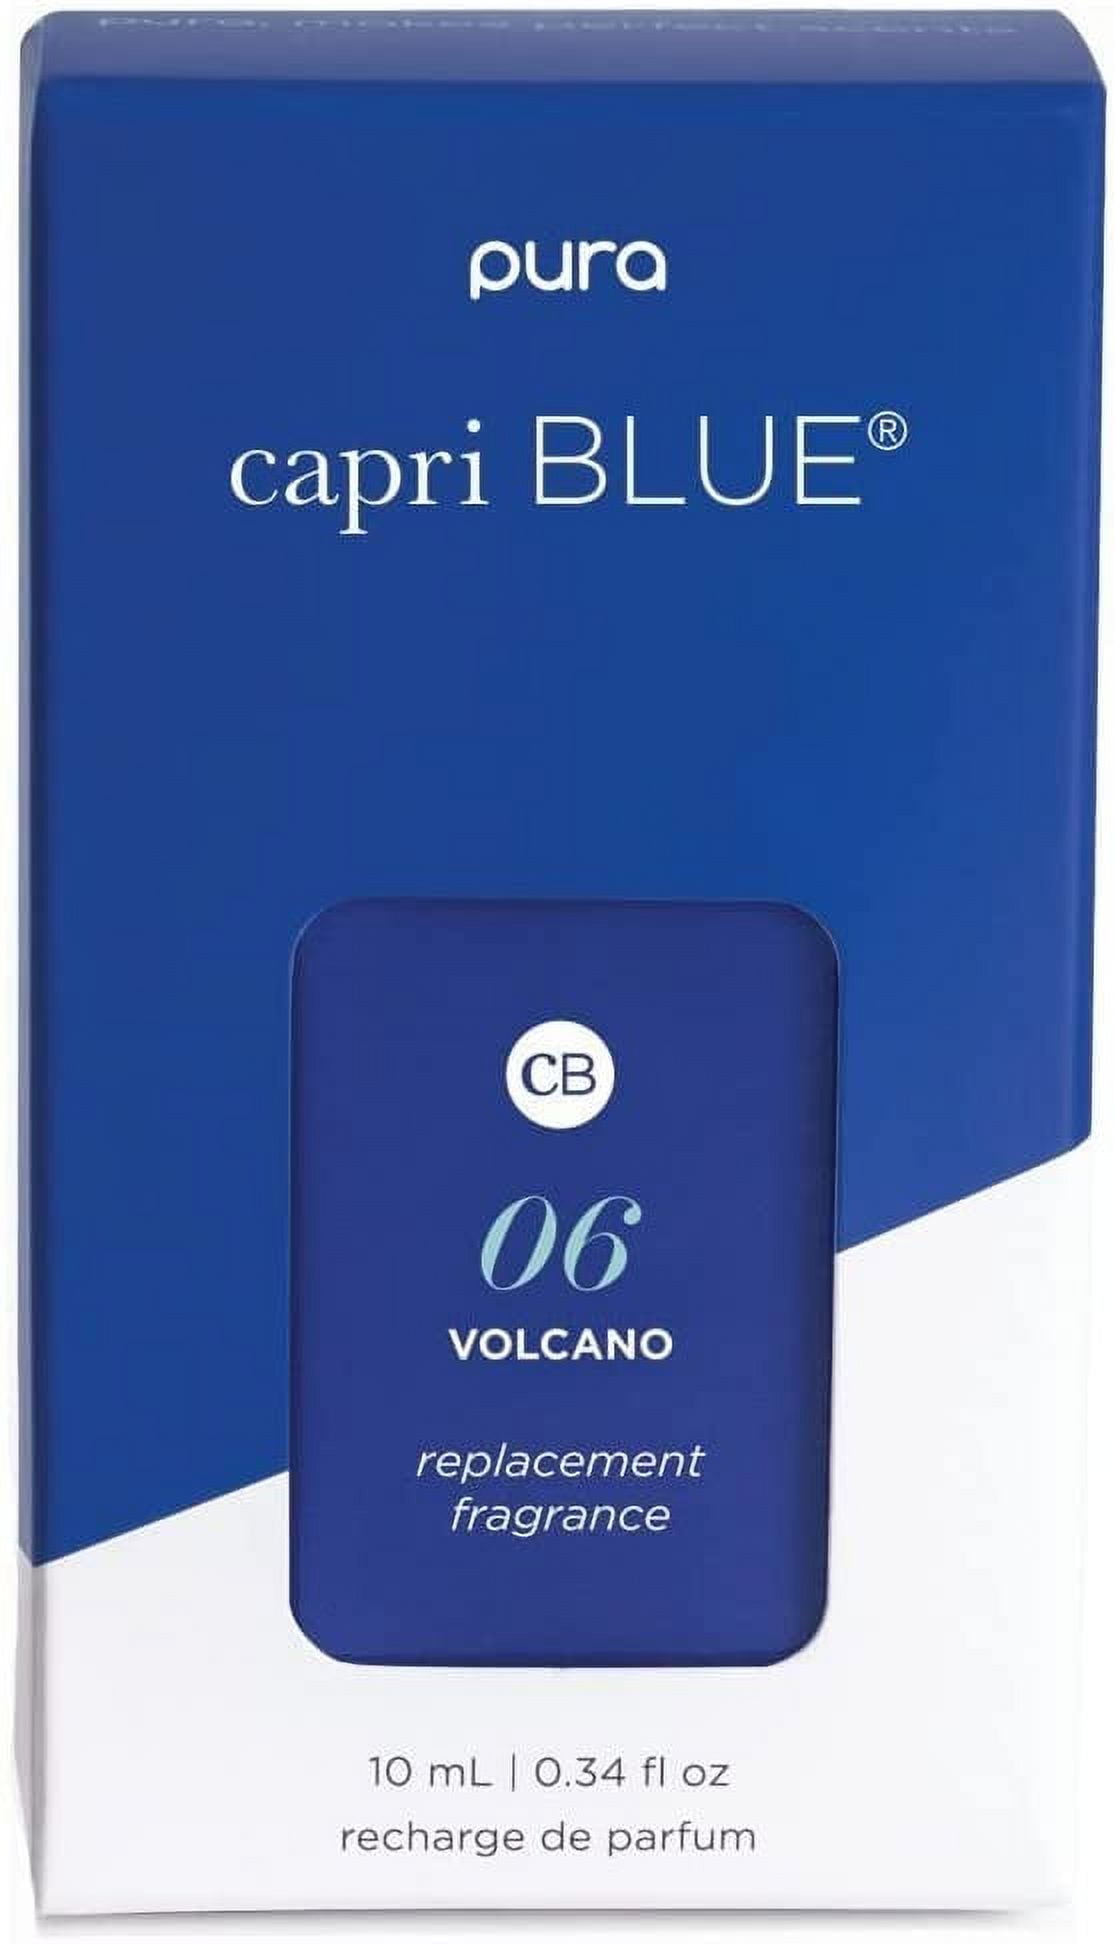 Capri Blue Pura Replacement Fragrance - Maude